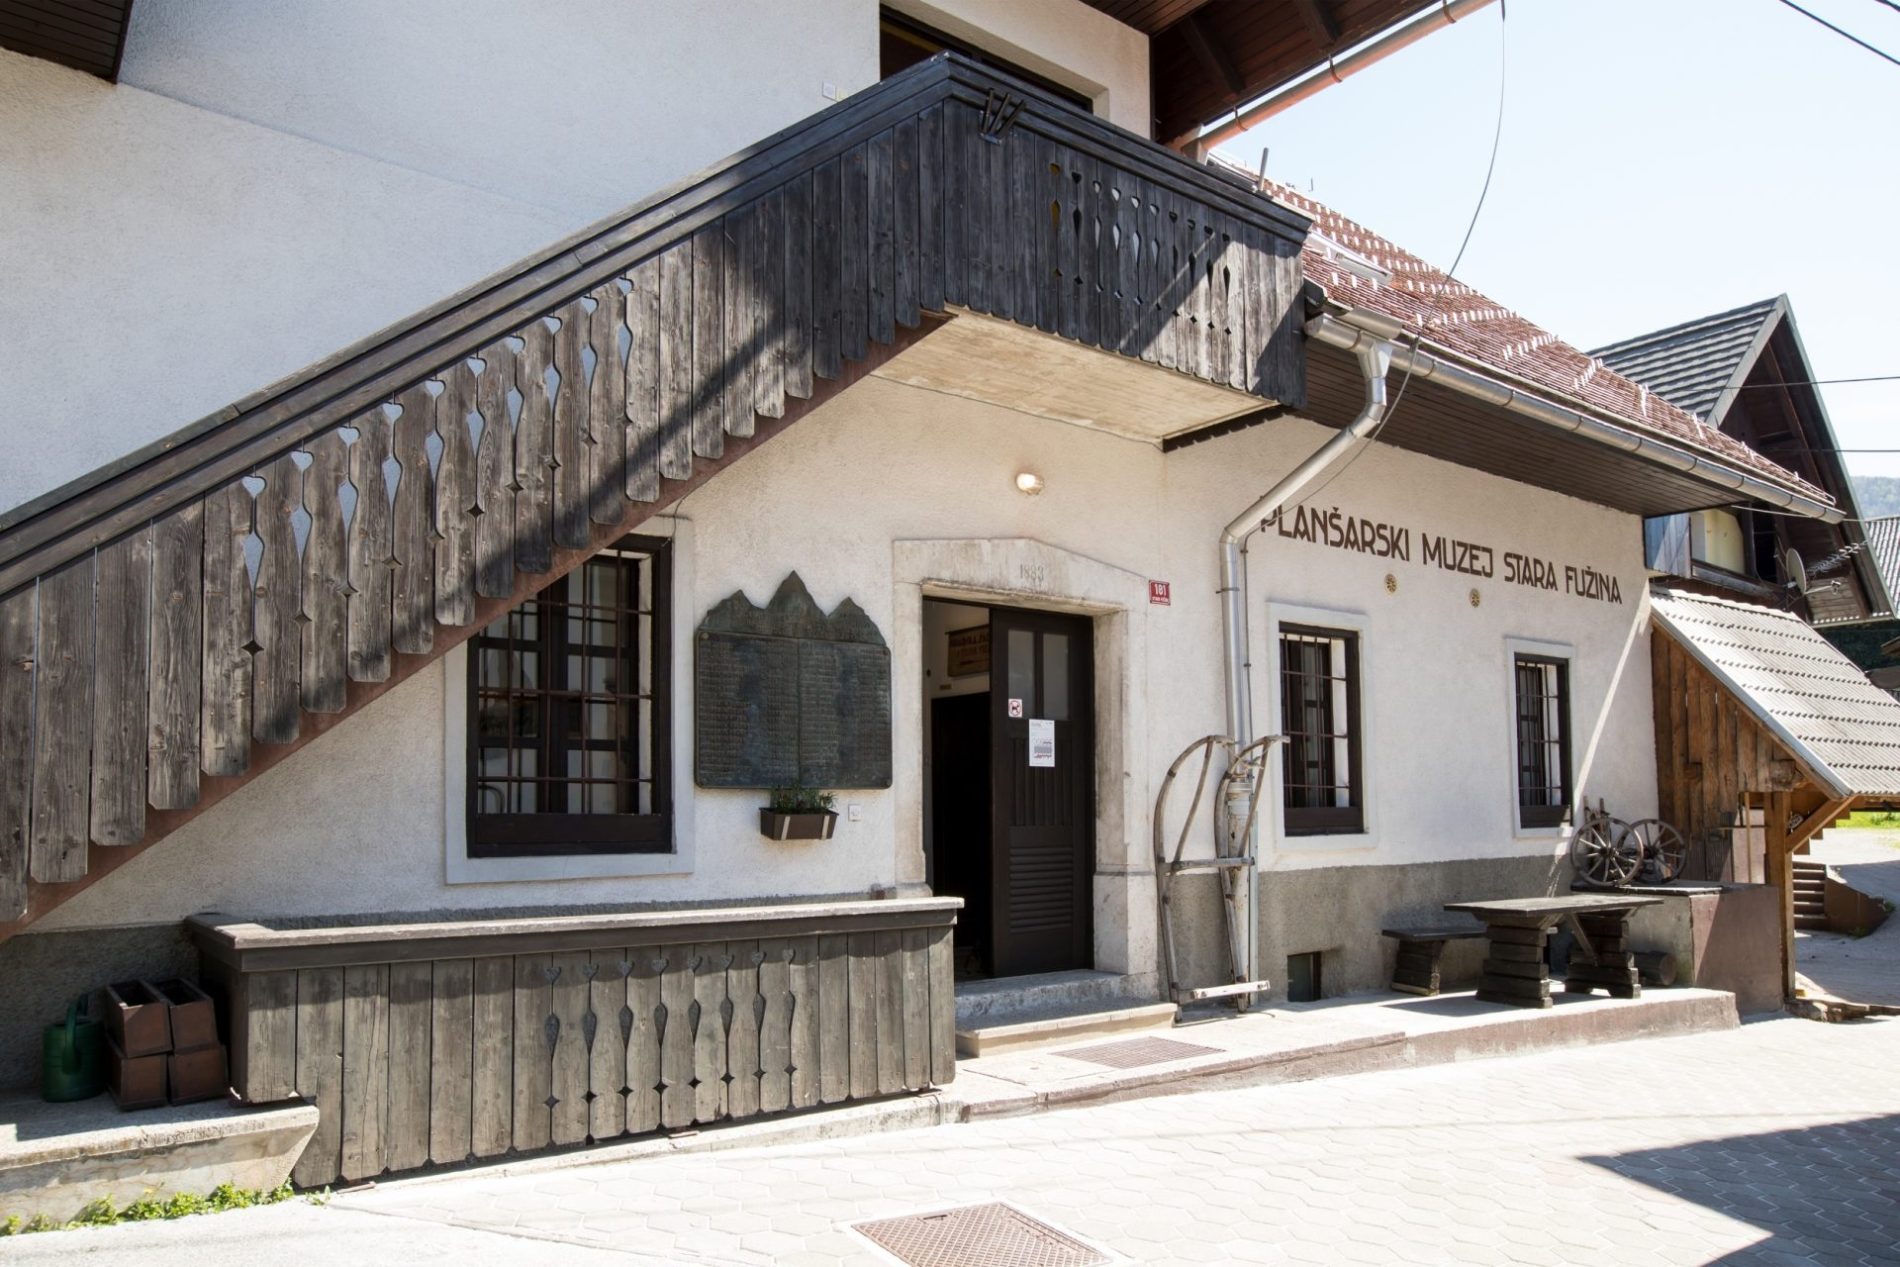 Plansarski-muzej-Stara-Fuzina-Arhiv-Turizem-Bohinj1